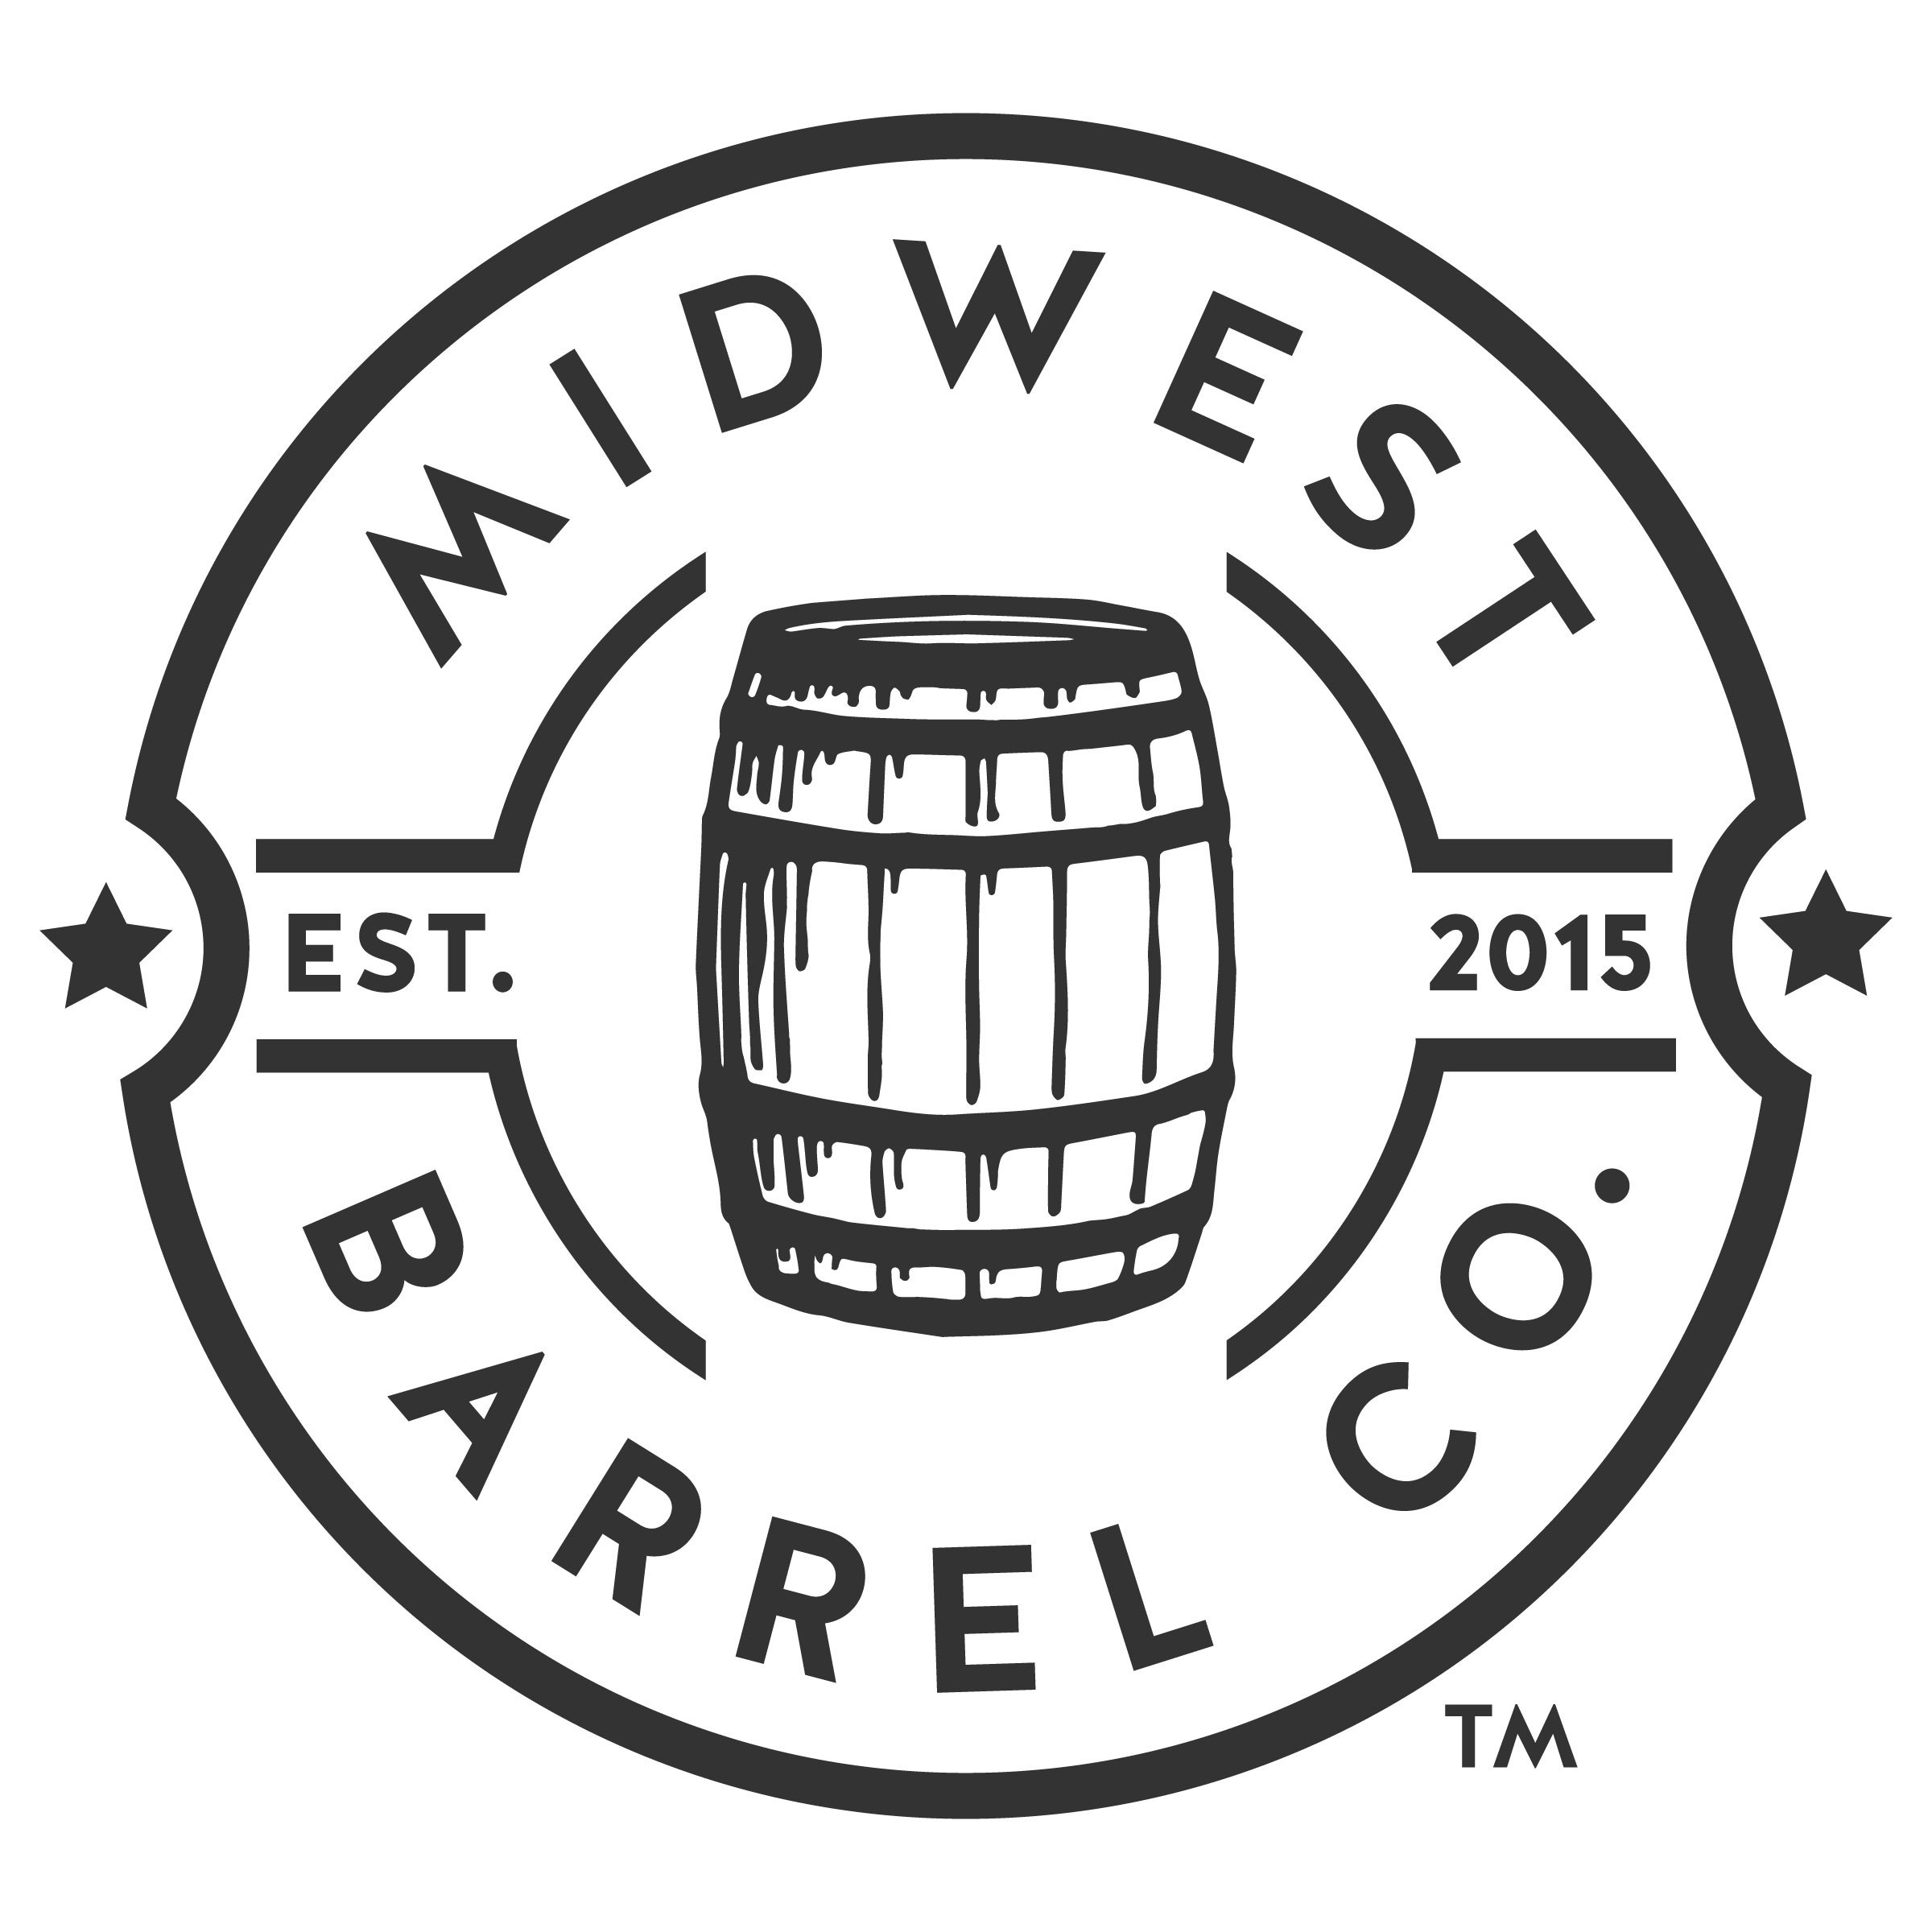 Midwest Barrel Company